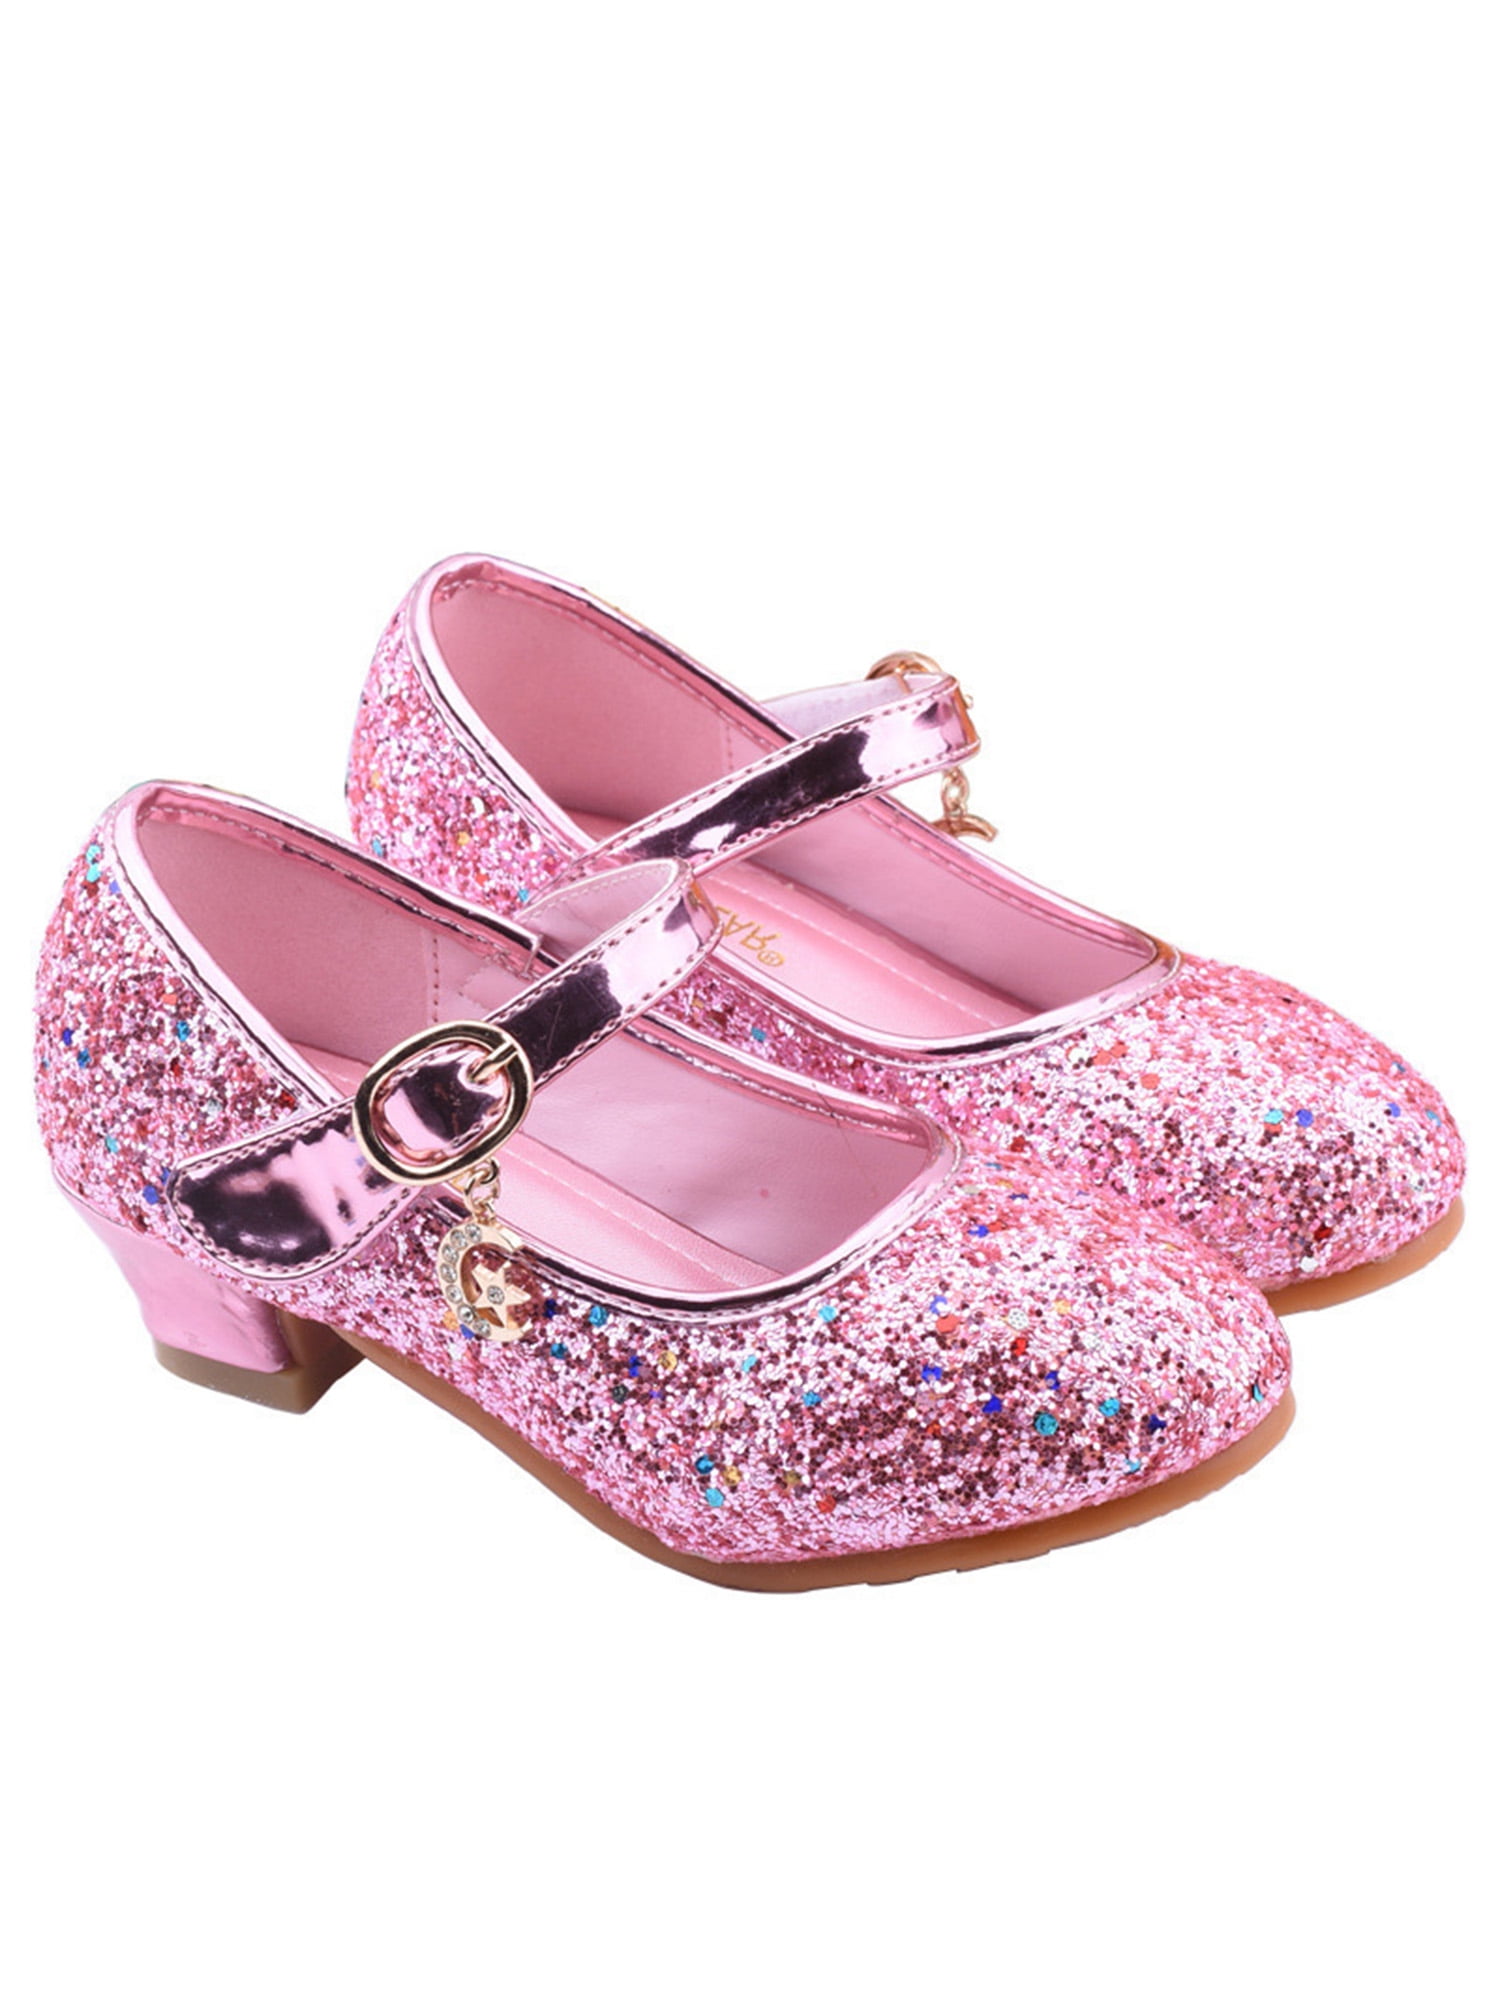 Kids Baby Sandals Toddler Infant Little Girls Bling Sequin Ribbon Bow Single Shoes Princess Sandals 